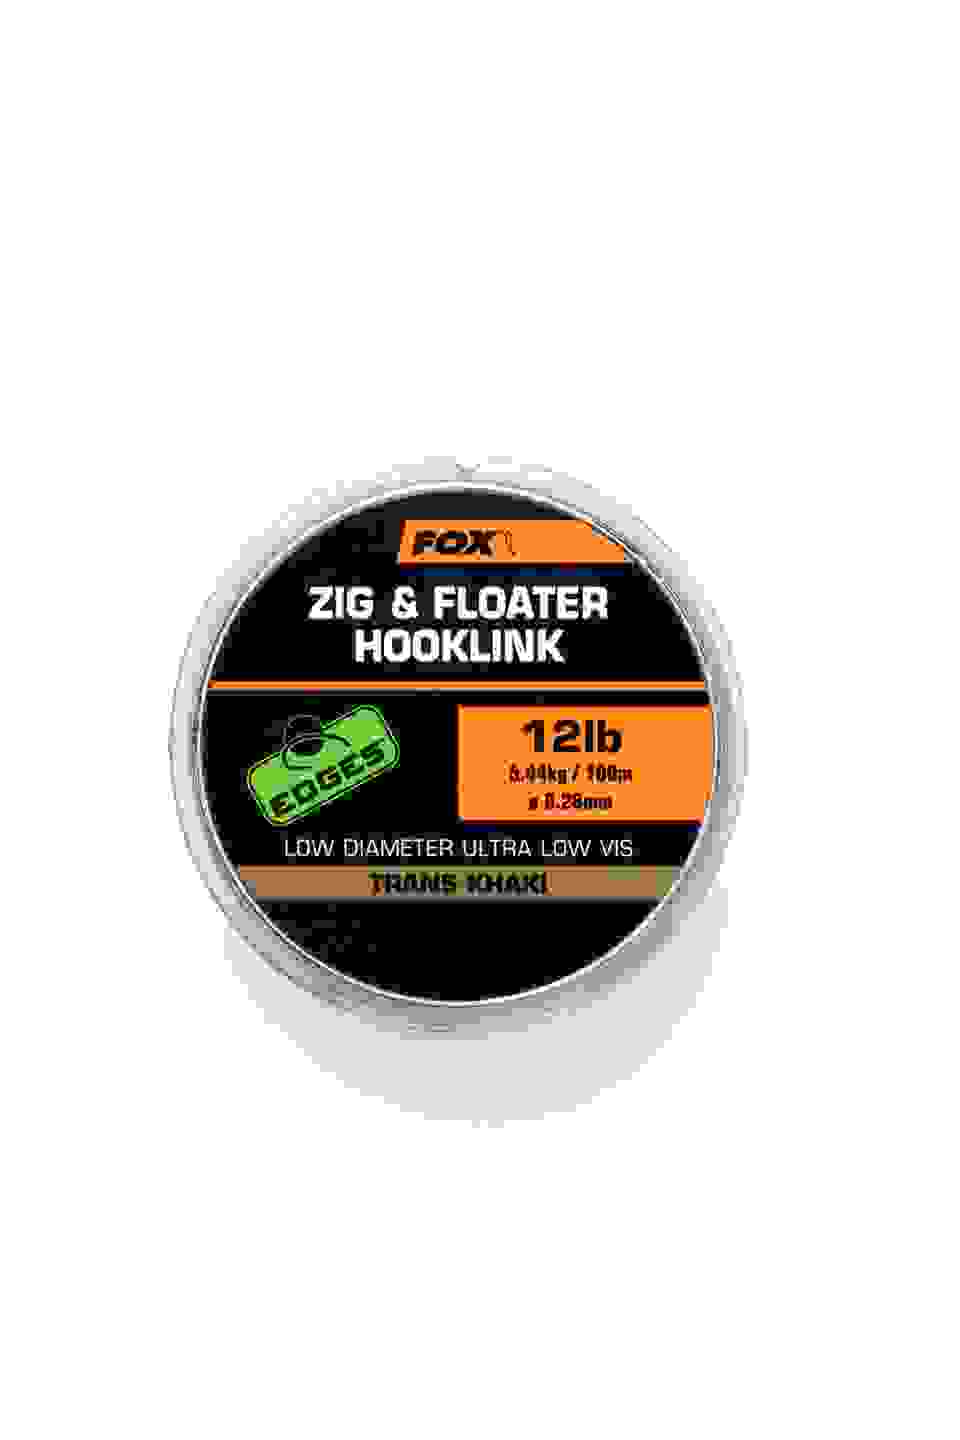 edges-zig-floater-hooklink_main_frontjpg